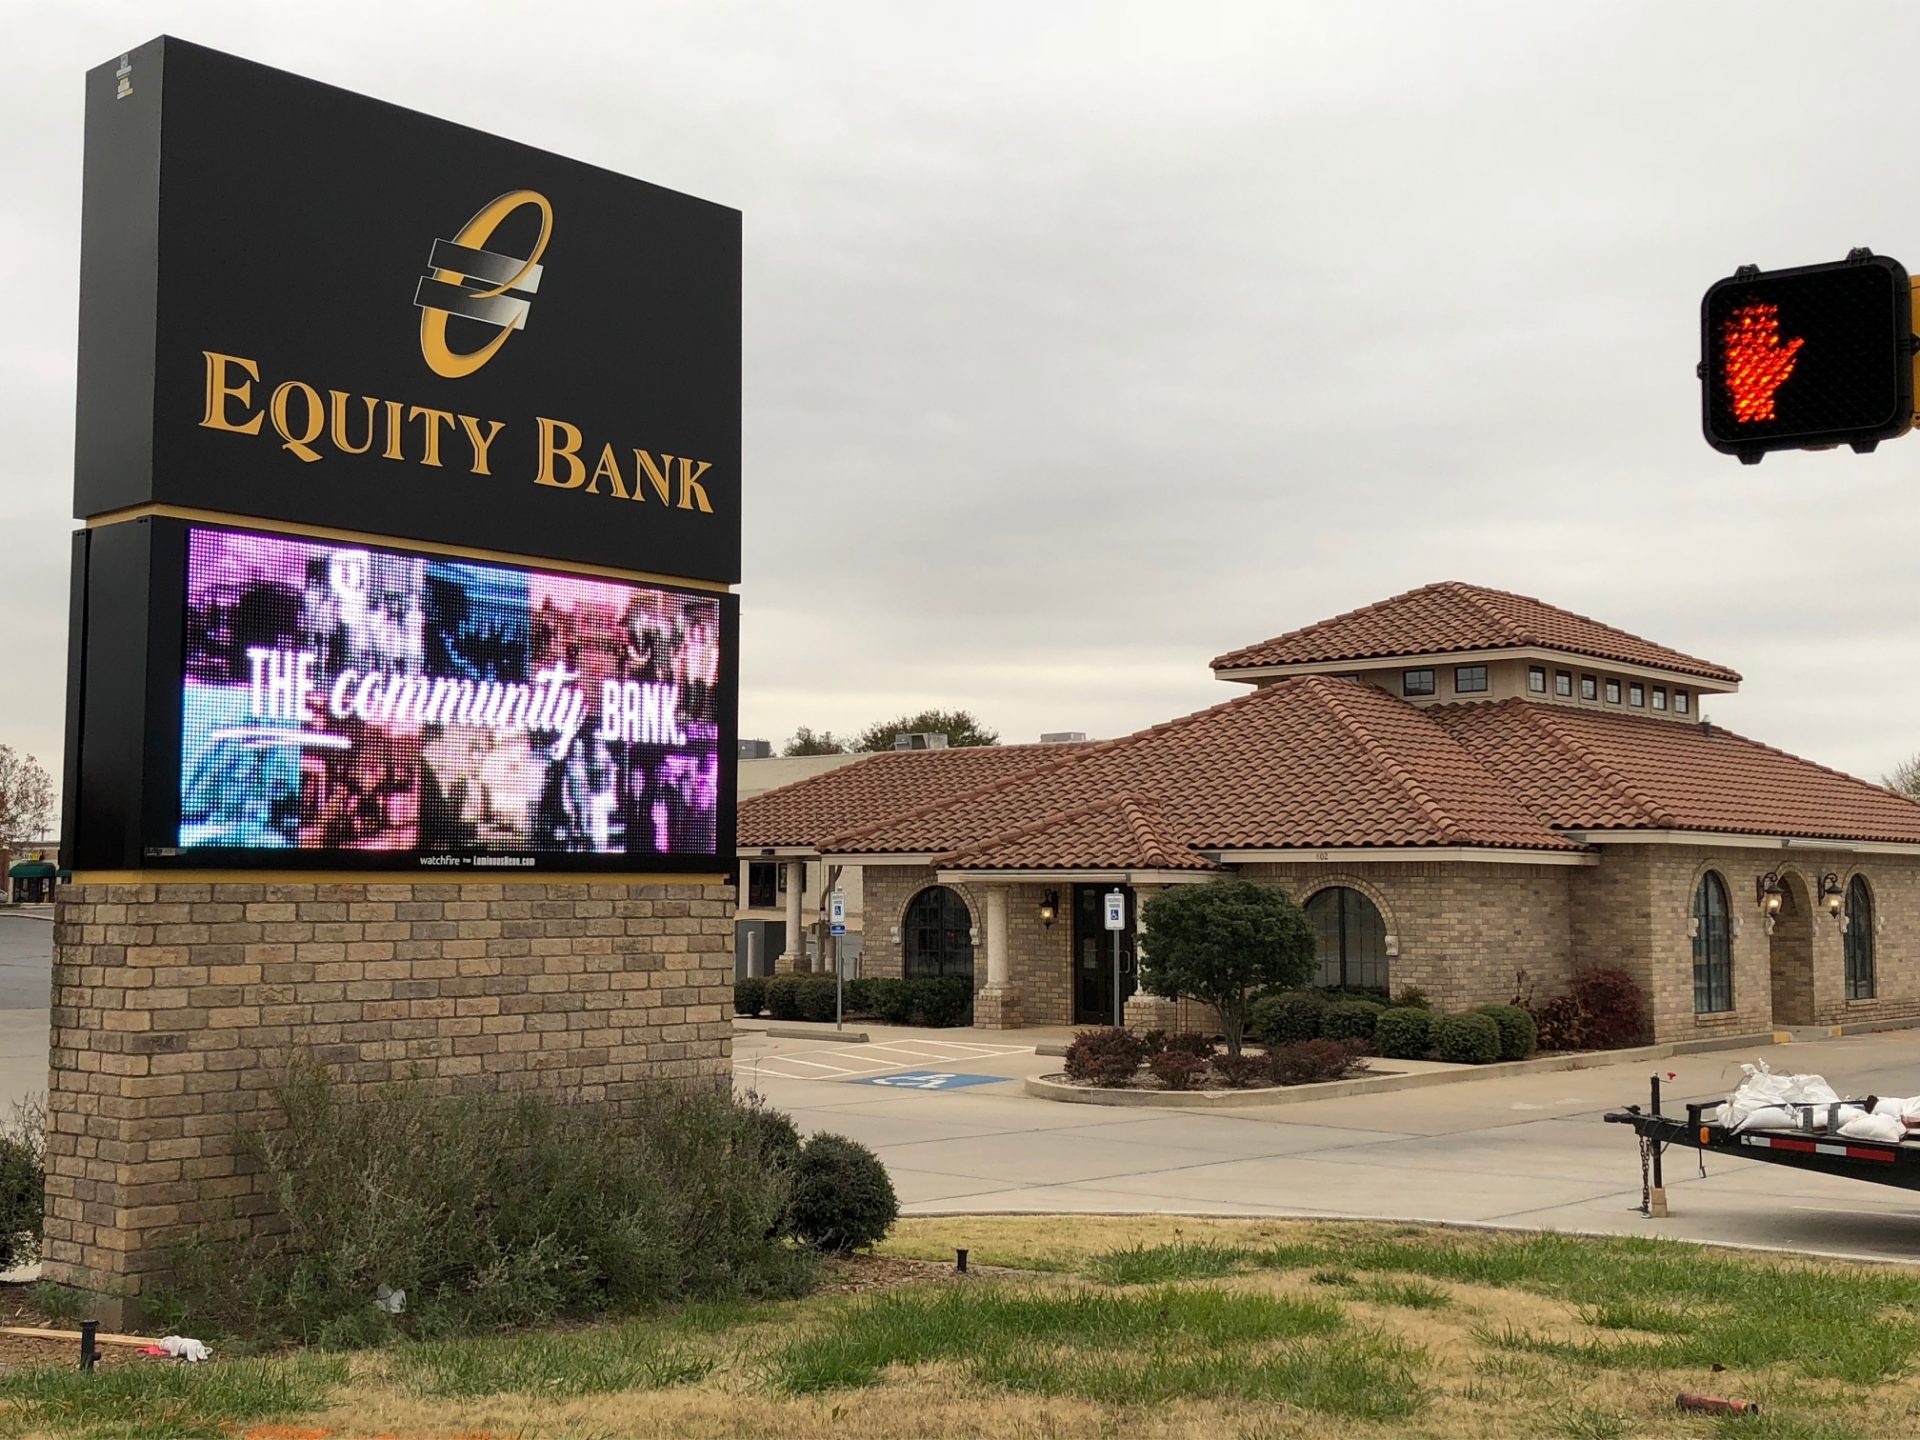 Equity Bank Ponca City North Park branch exterior.